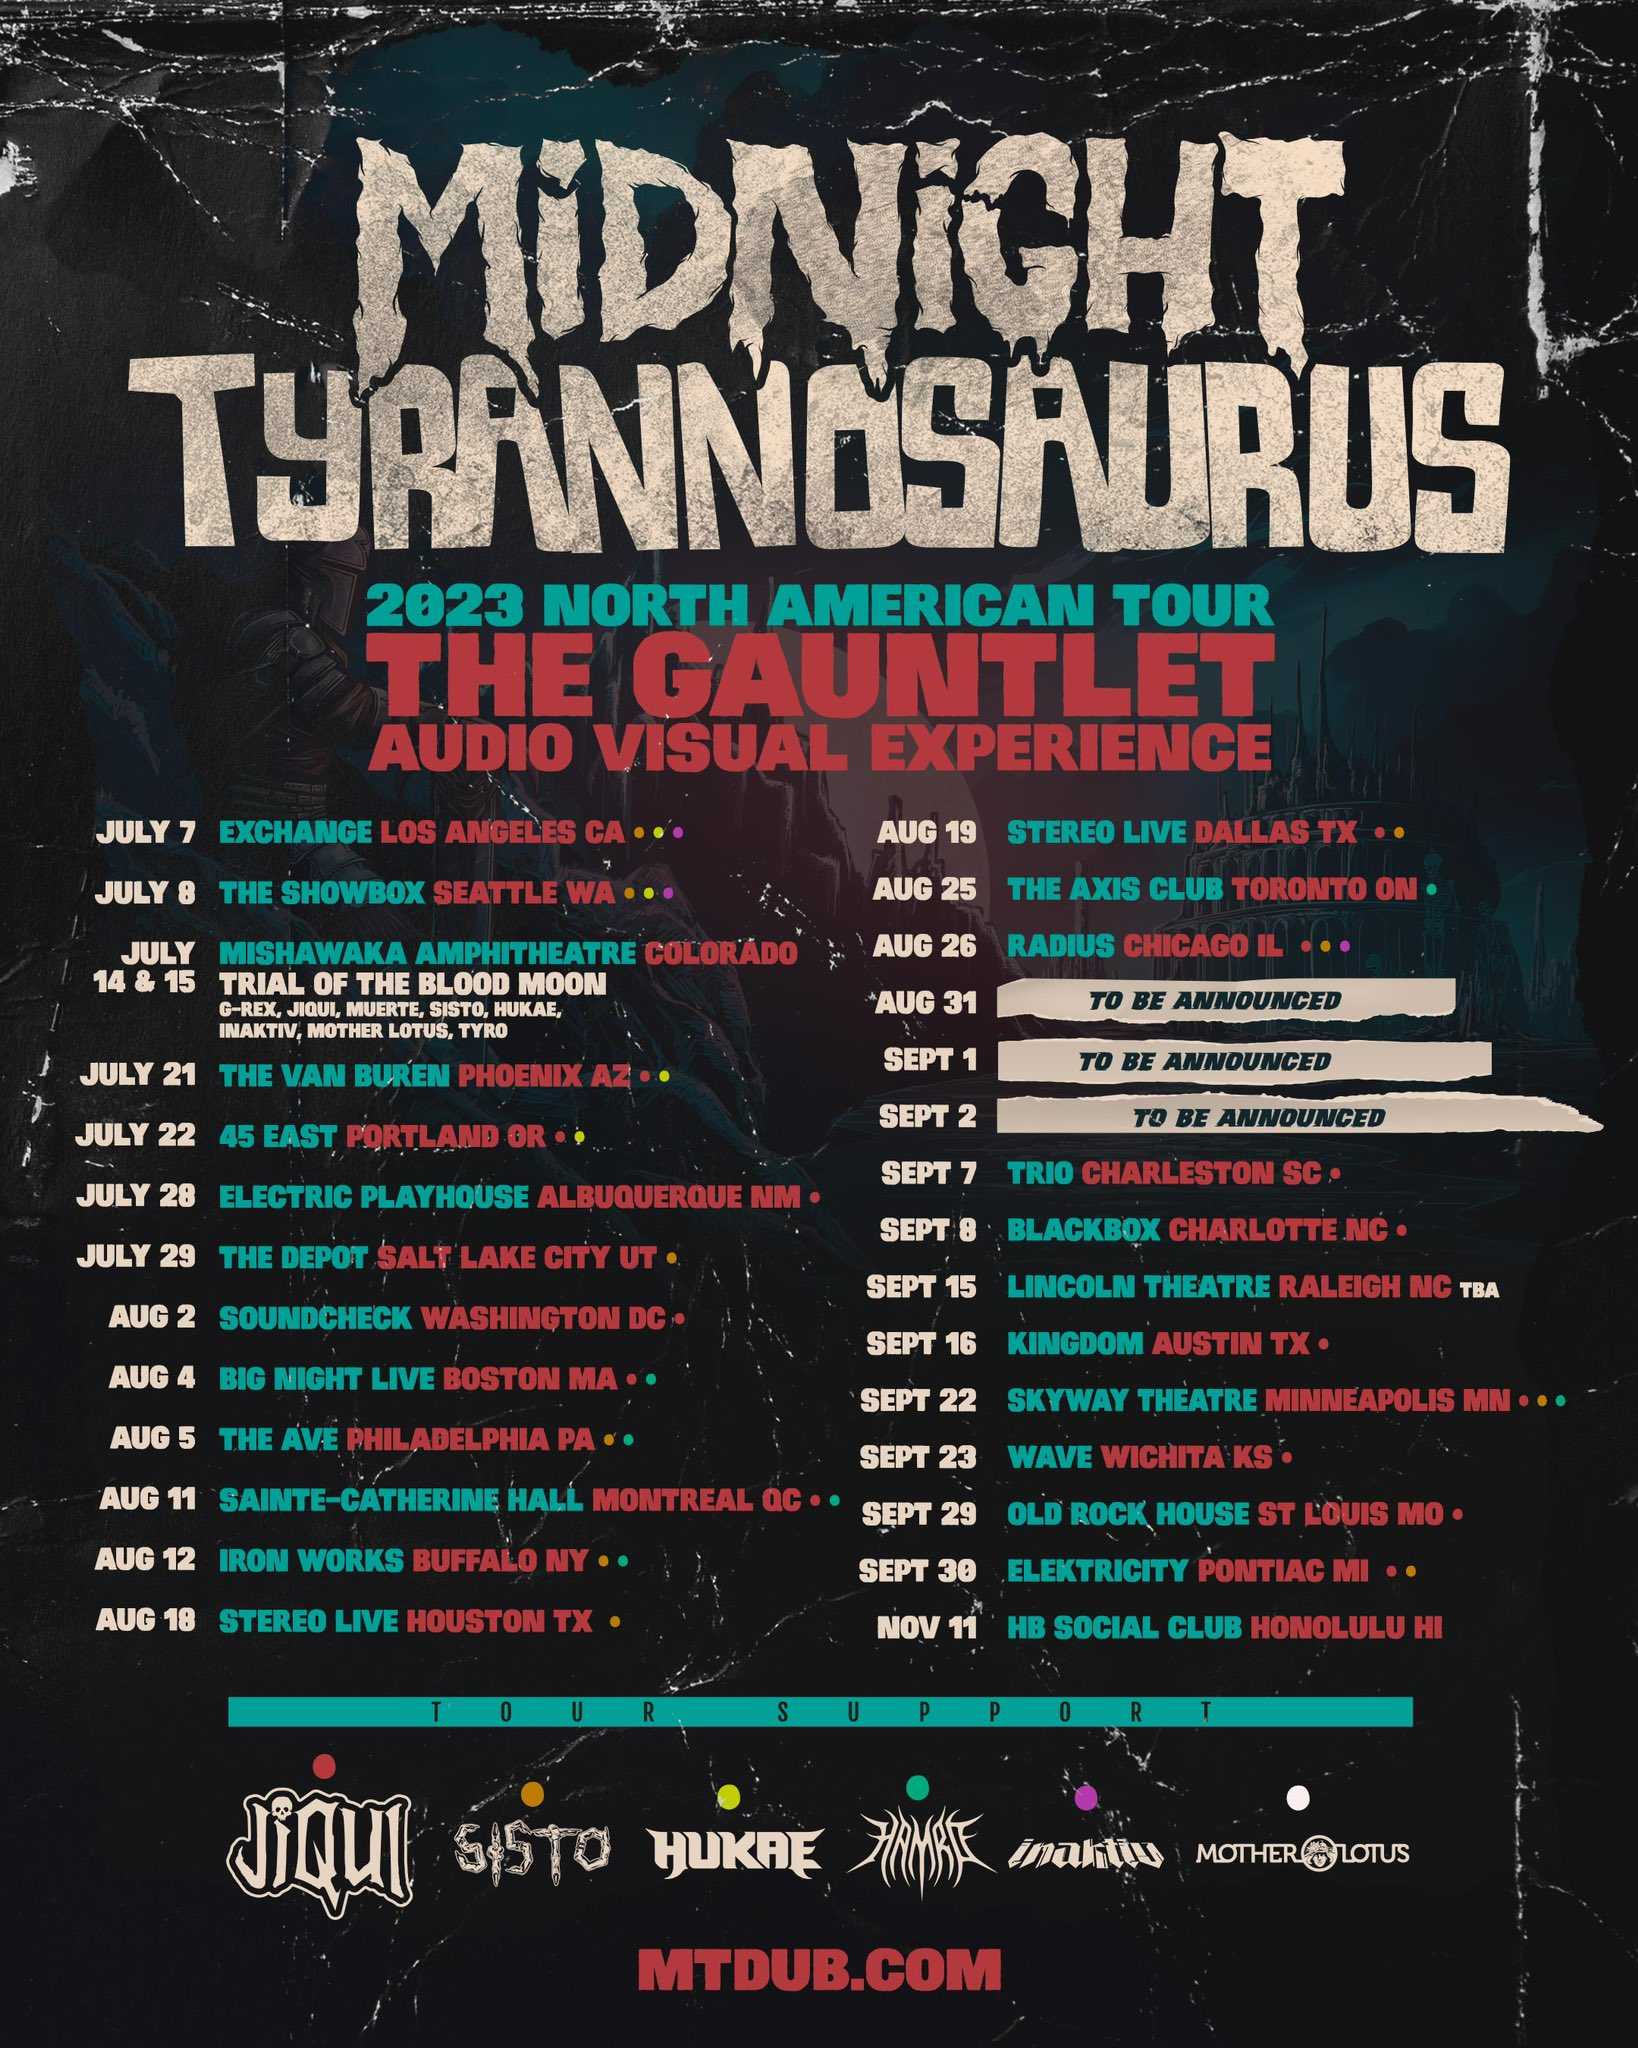 midnight-tyrannosaurus-the-gauntlet-tour-big-night-live-2023-08-04-boston